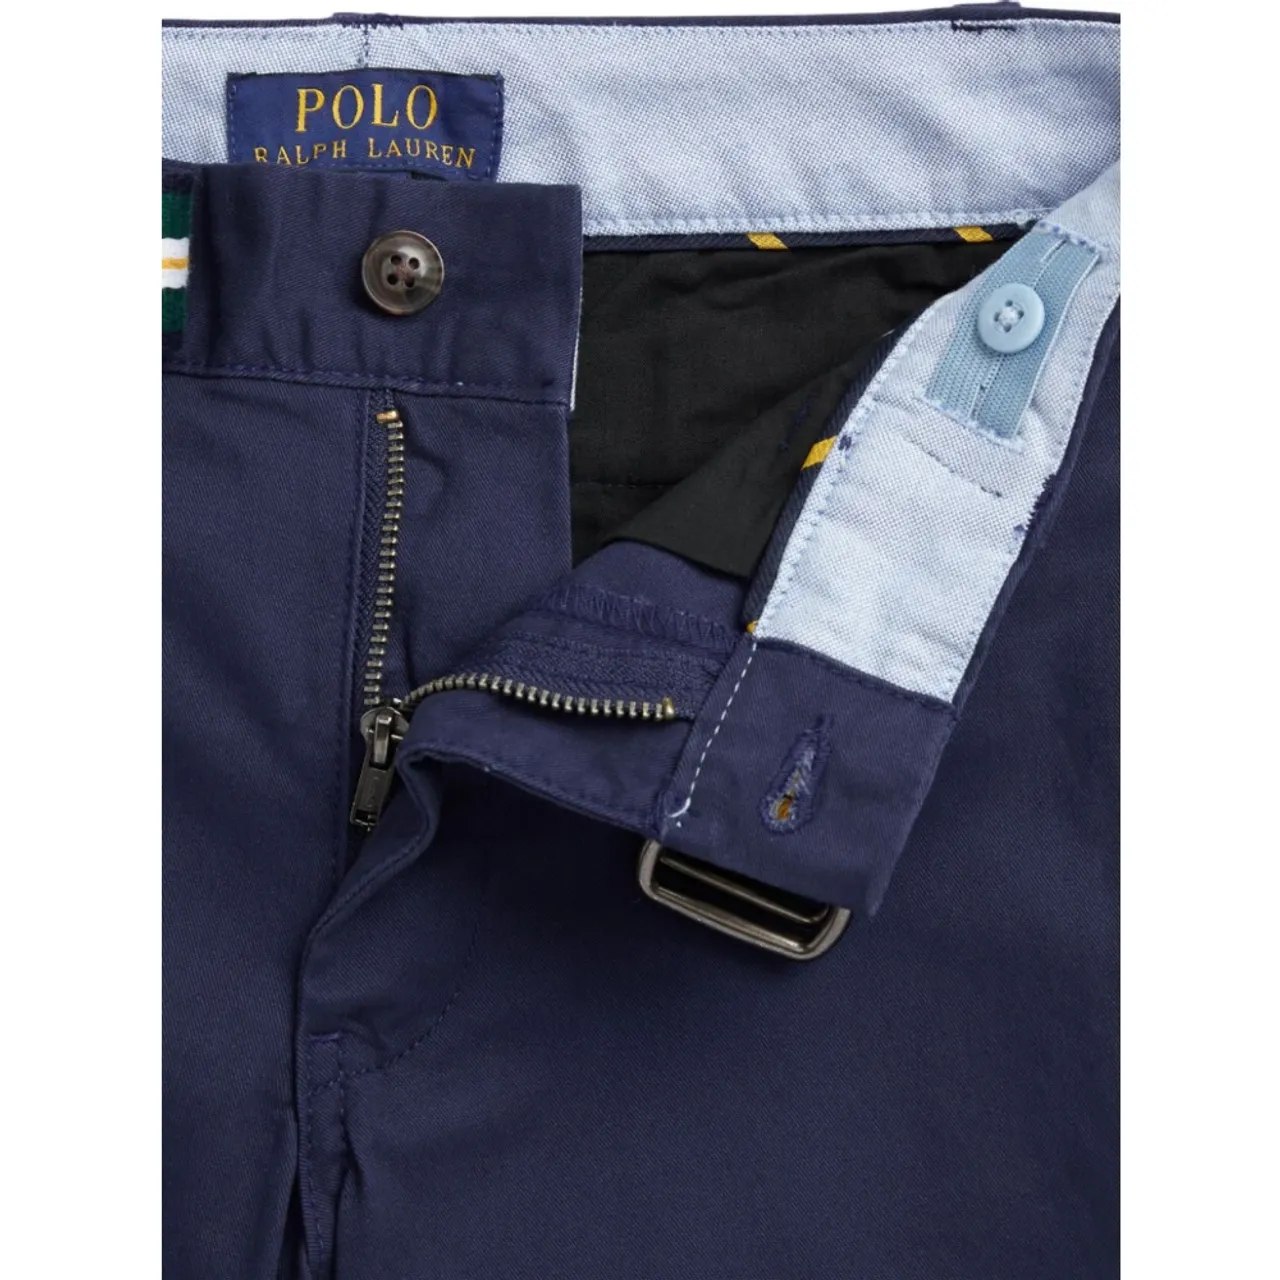 Blaue Shorts mit Polo Pony Motiv Polo Ralph Lauren